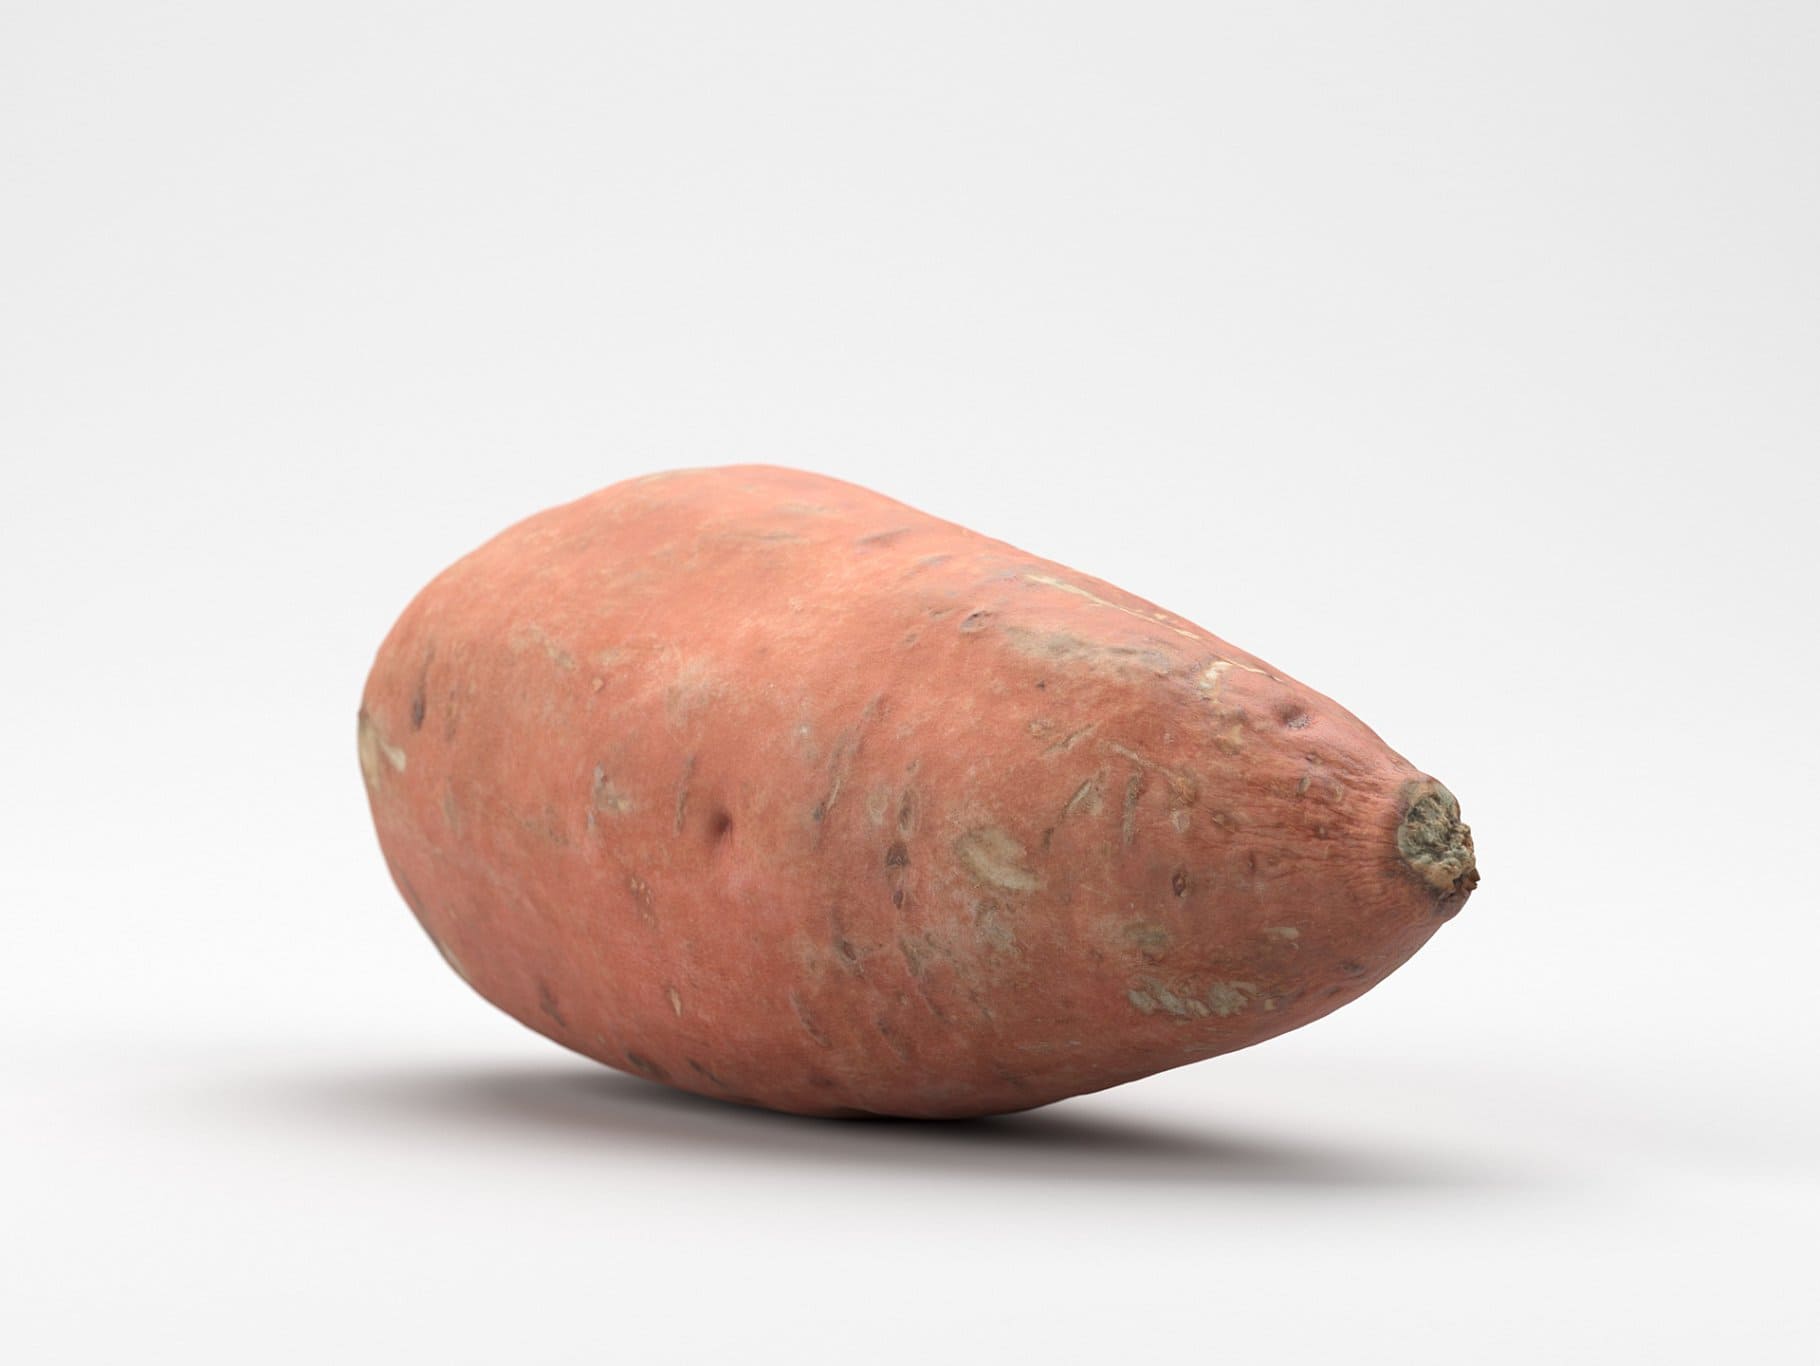 Realistic pink potato on a white background.